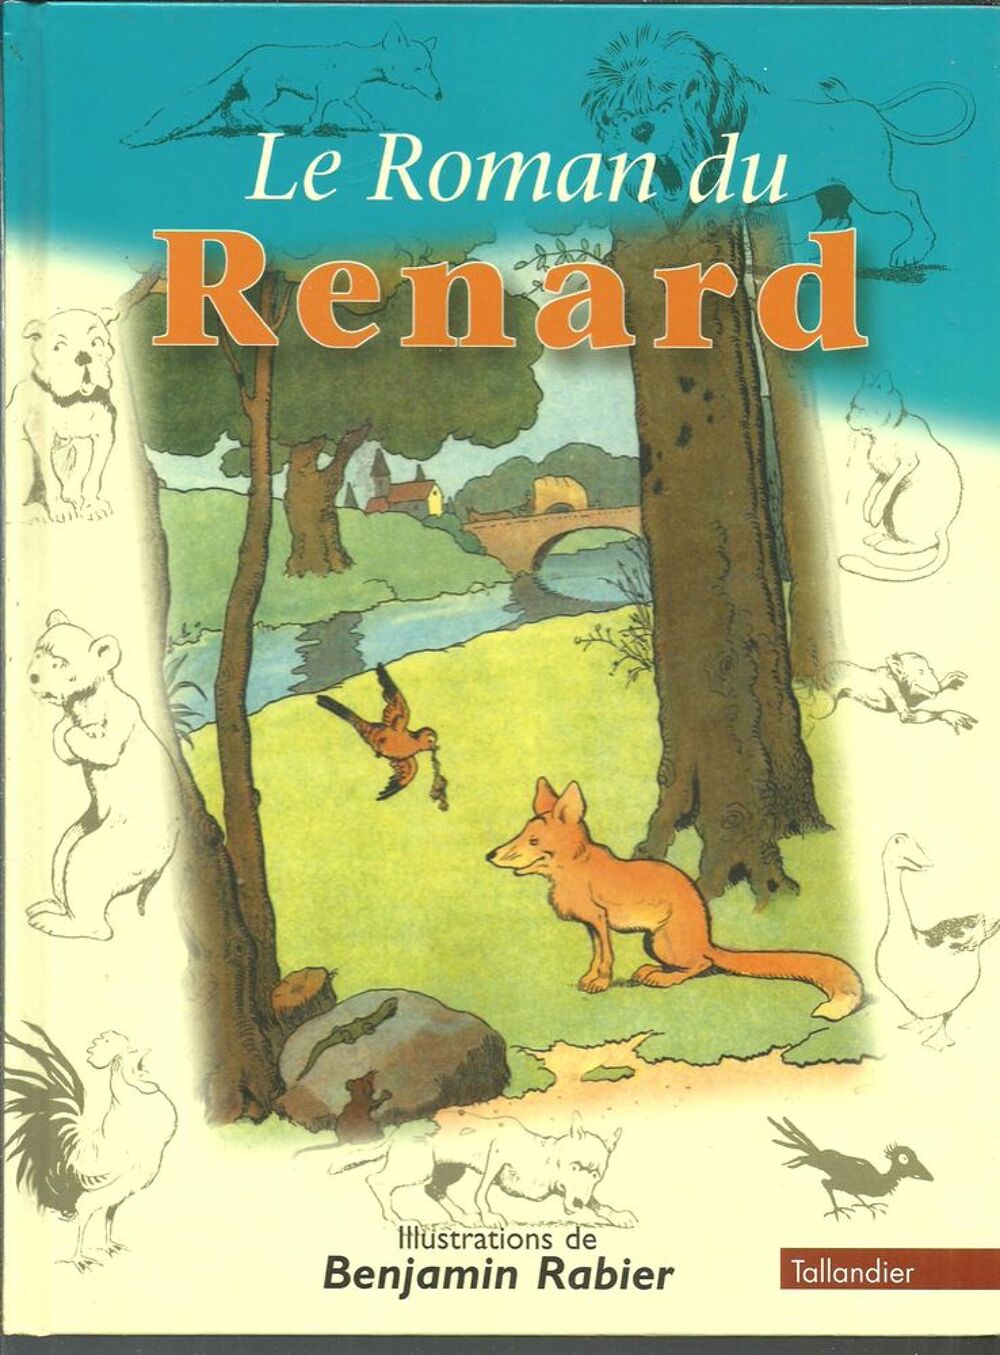 Le roman du renard - Illustrations de Benjamin Rabier 1999 Livres et BD